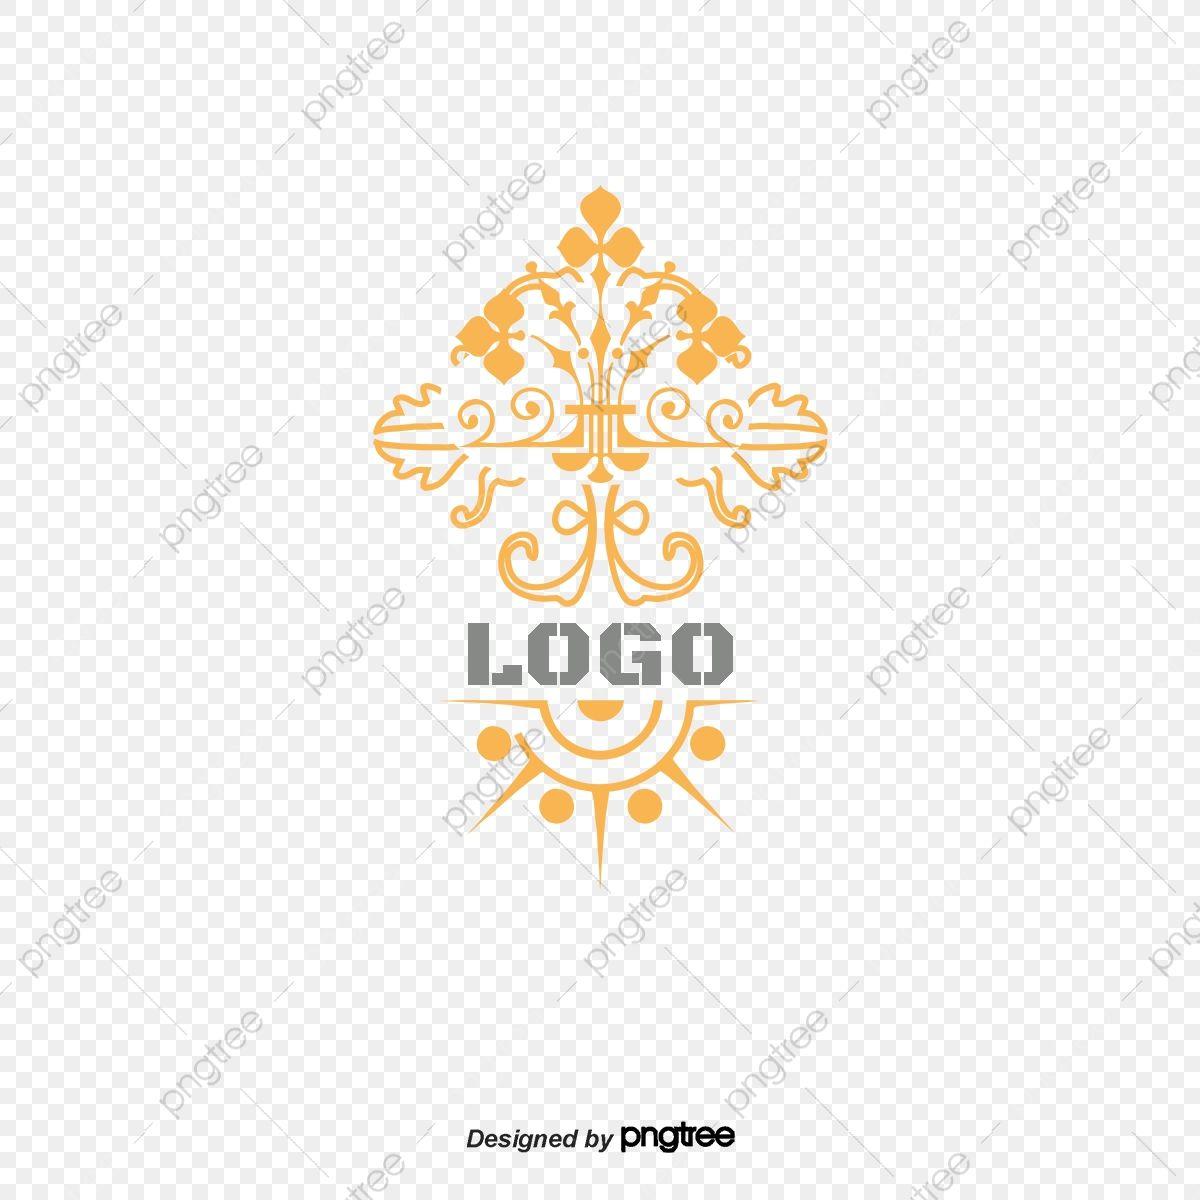 Логотип форбс без фона